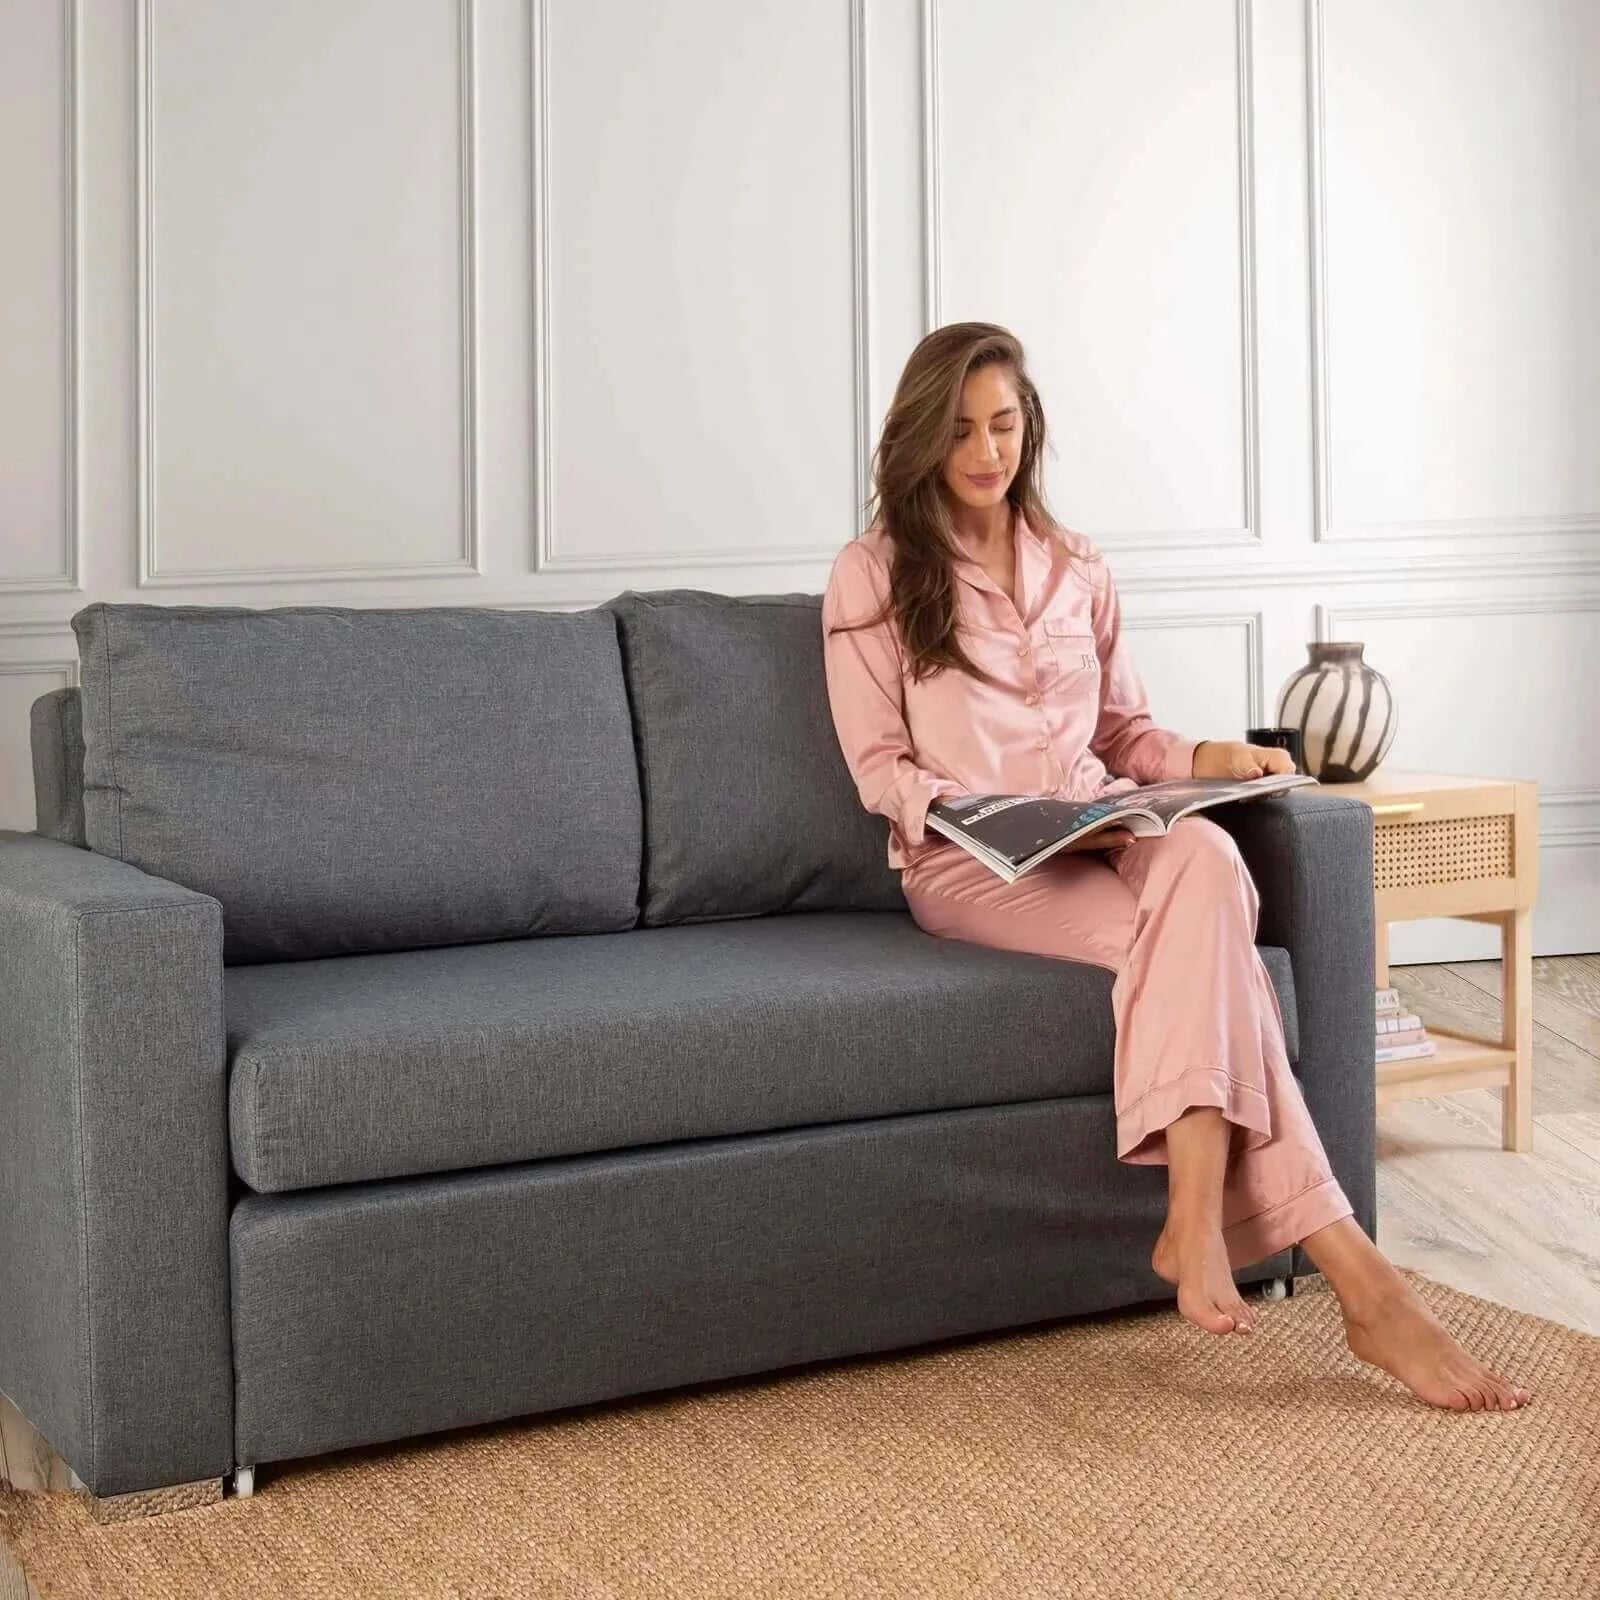 Buy Casa Decor Selena 2 in 1 Sofa Couch Charcoal 2 Seater in Australia -Upinteriors